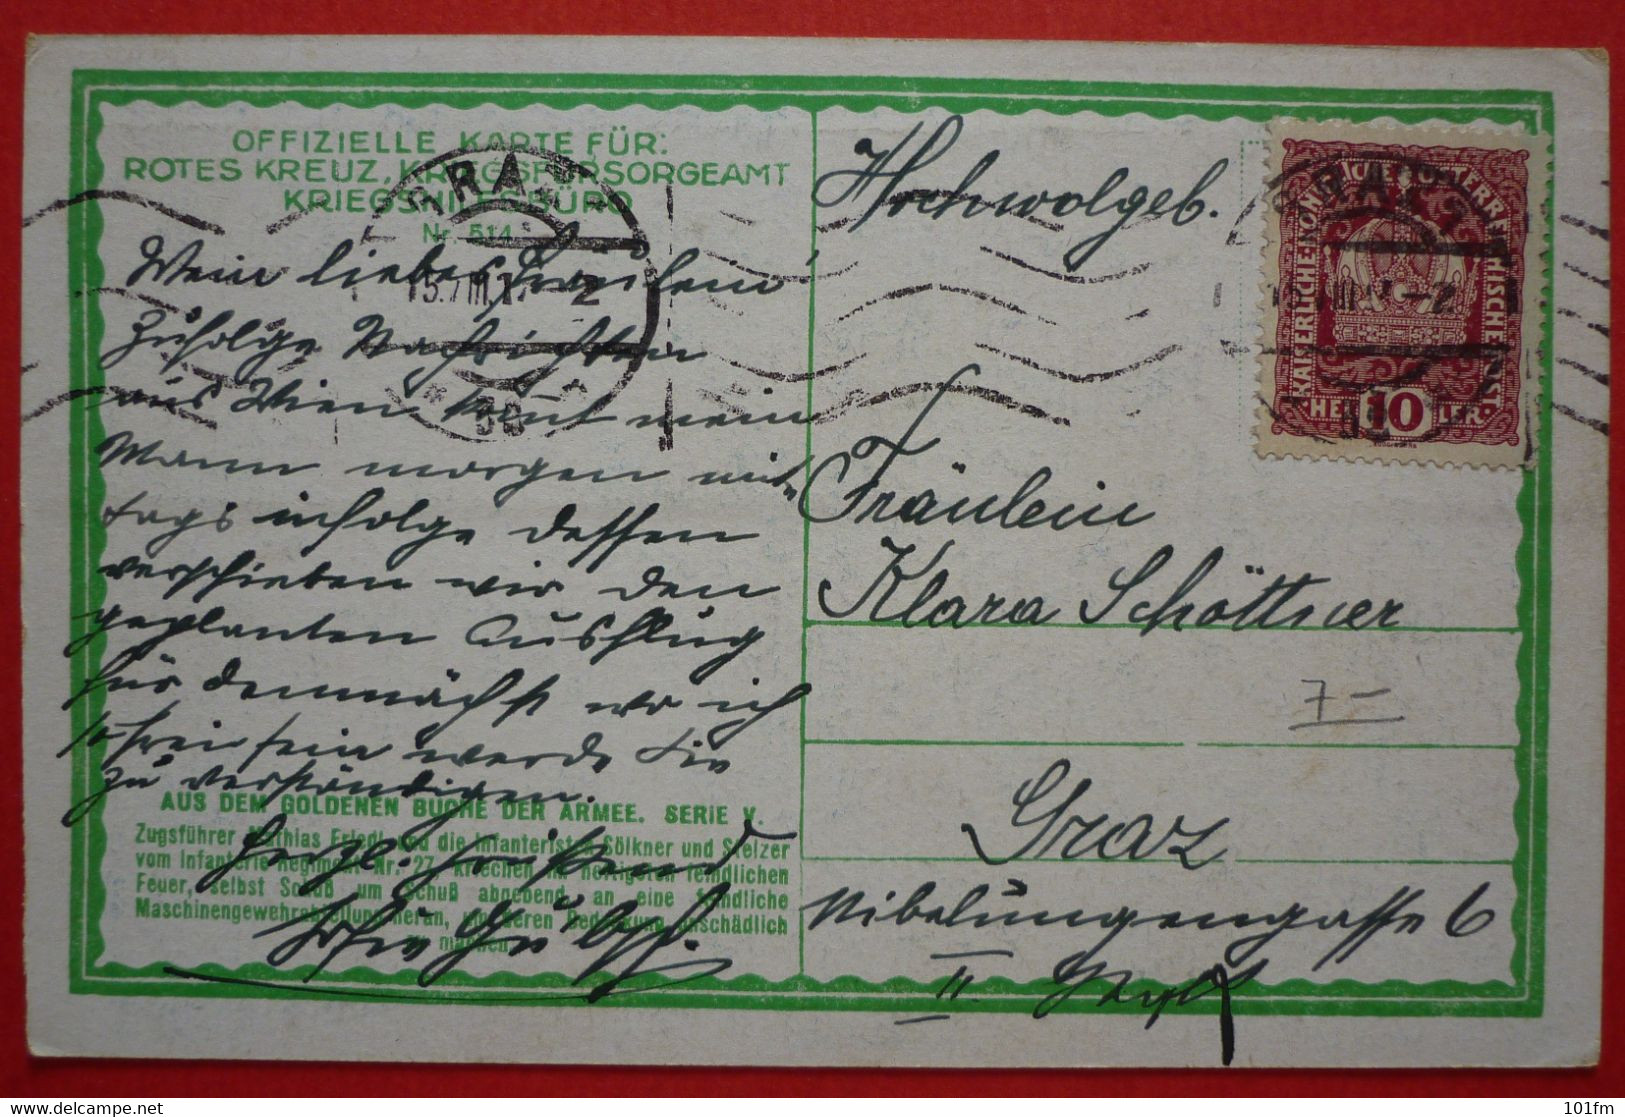 K.u.K. Soldaten, WWI - Offizielle Karte Fur Rotes Kreuz Nr. 514 - Oorlog 1914-18